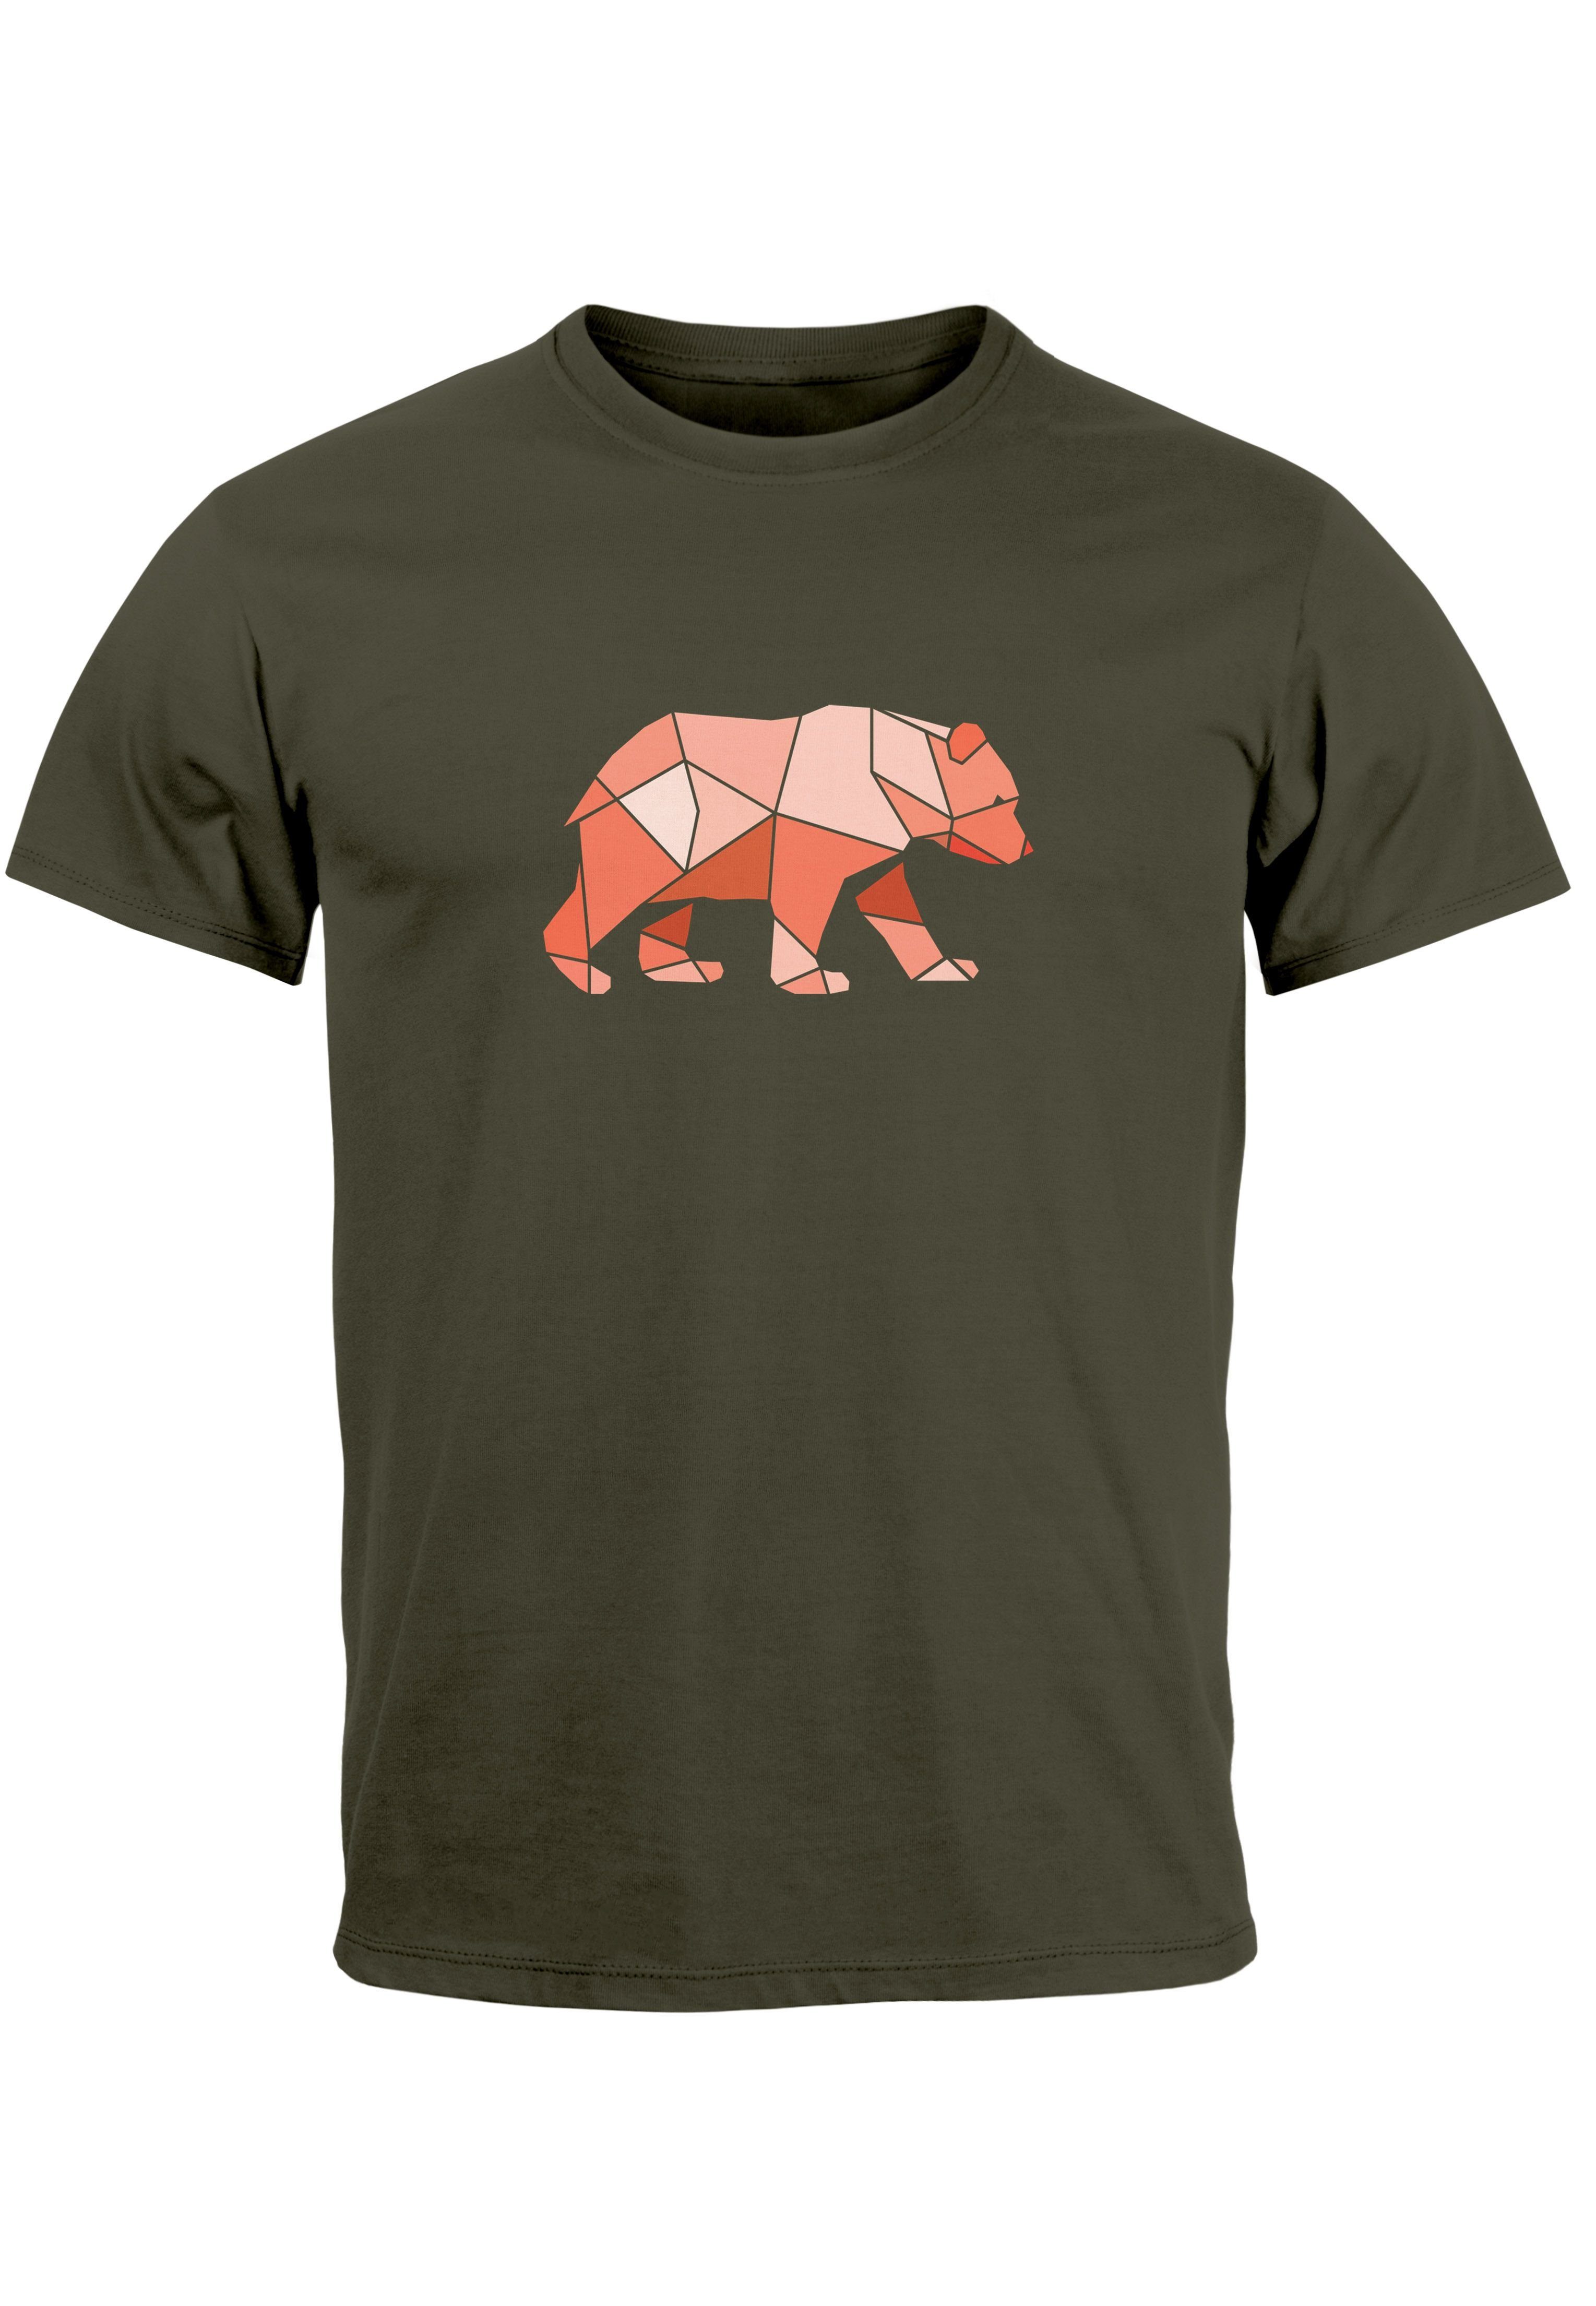 Natur Outdoor T-Shirt Fash Herren Neverless Print-Shirt army Bär Motive mit Grafik Polygon Printshirt Print